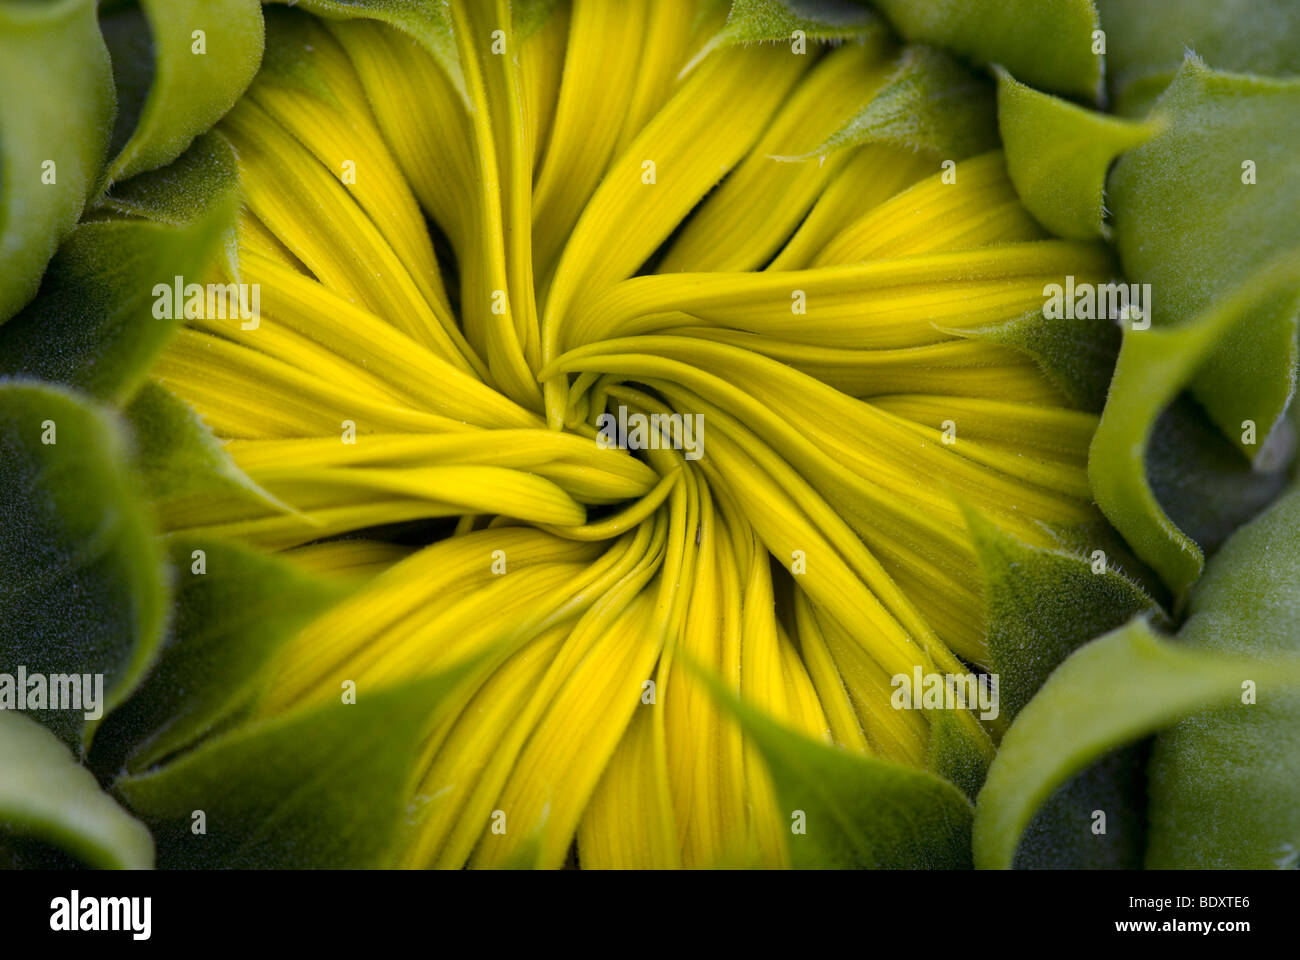 Yellow whorl of petals on opening sunflower Stock Photo